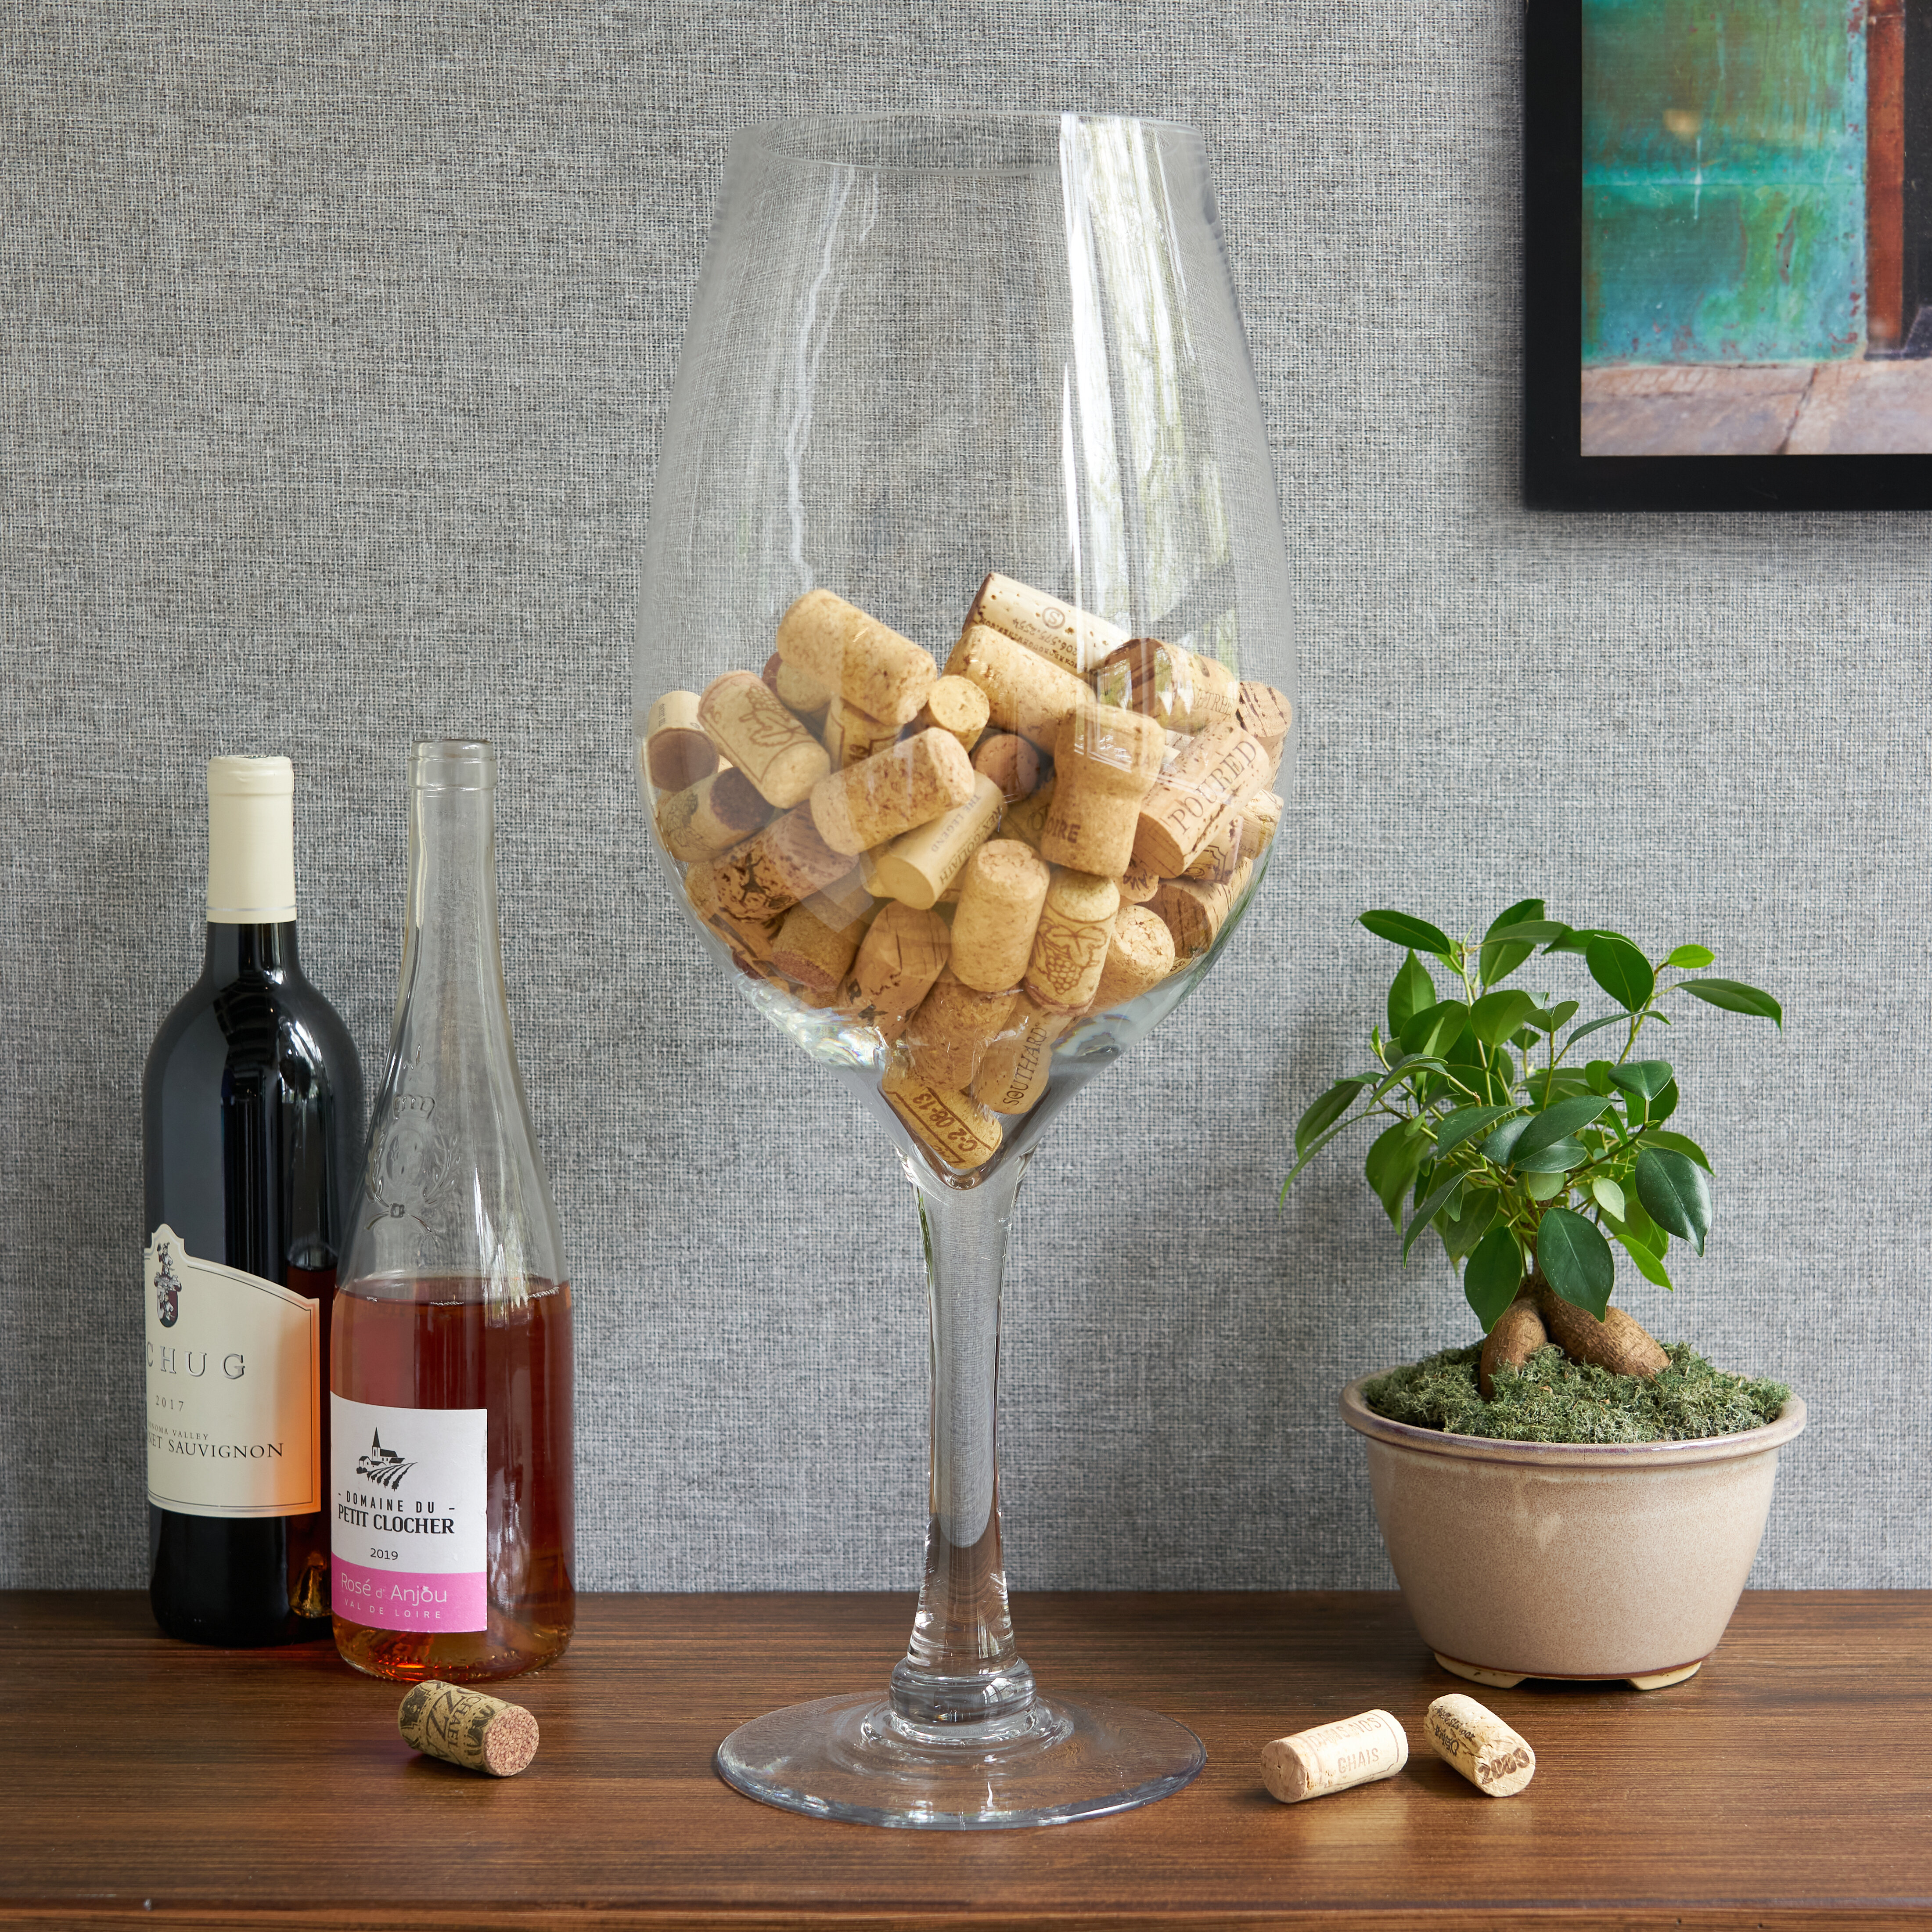 True Decorative Wine Cork Holder & Reviews